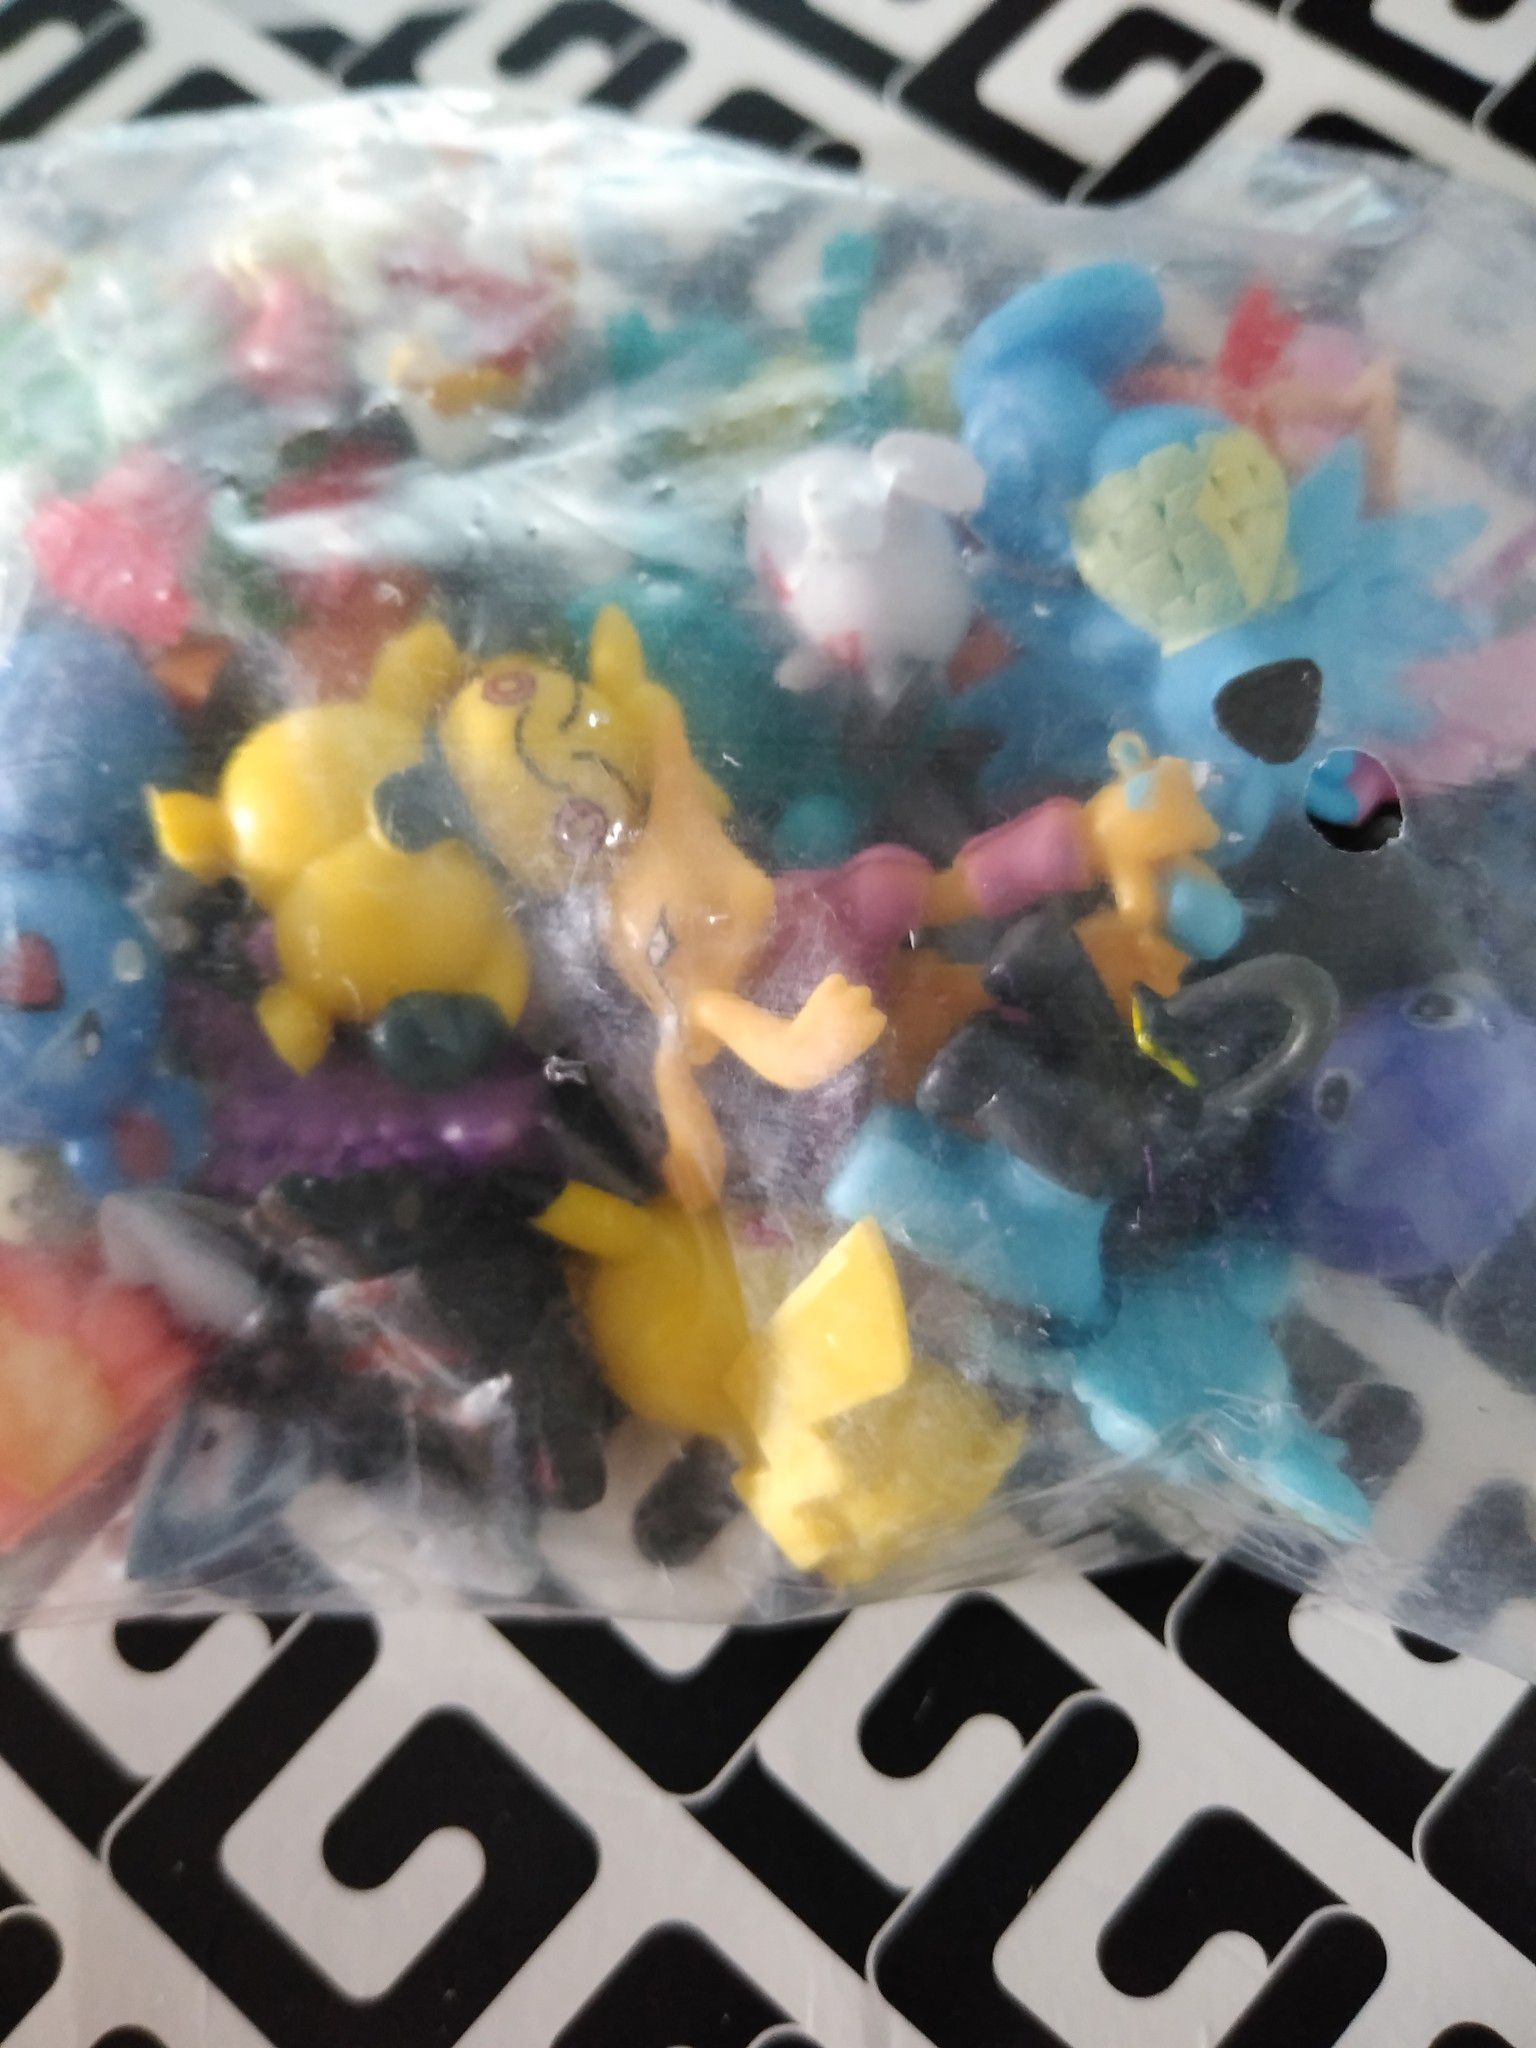 (LOT 1) 24 Factory Sealed Collectible Pokemon Mini Figure Pikachu Miniture Action Toys Figurines